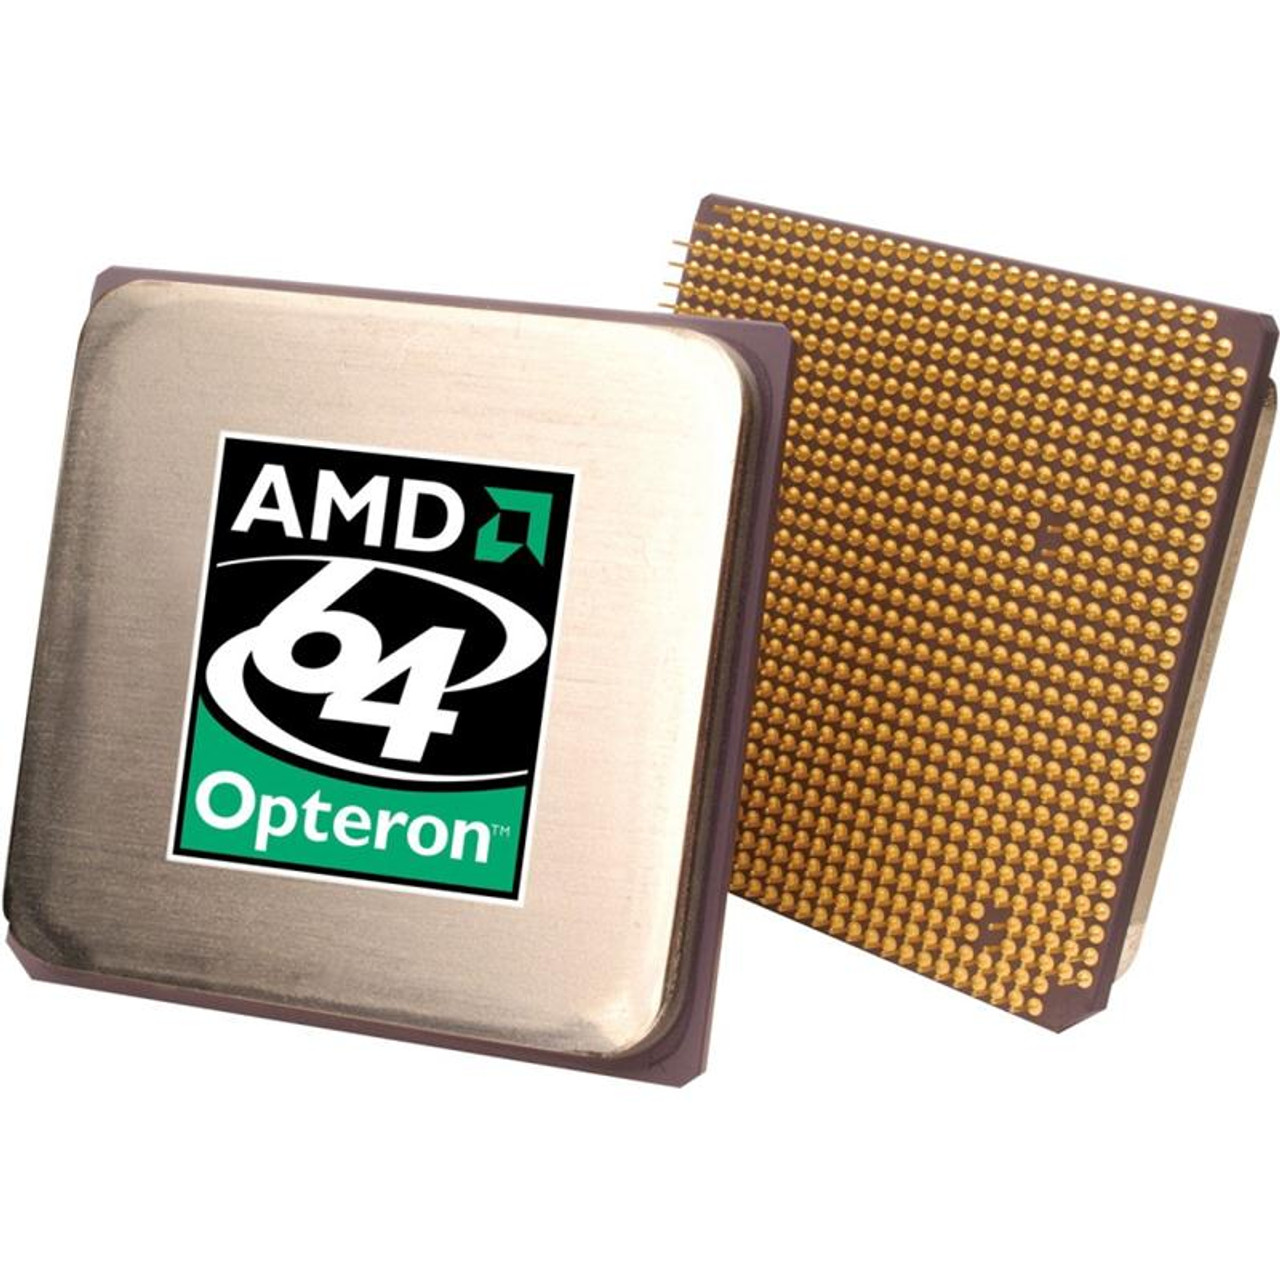 AMD Opteron 8-Core 6134 G34 (WithOut Fan) - www.bigbangmexico.com